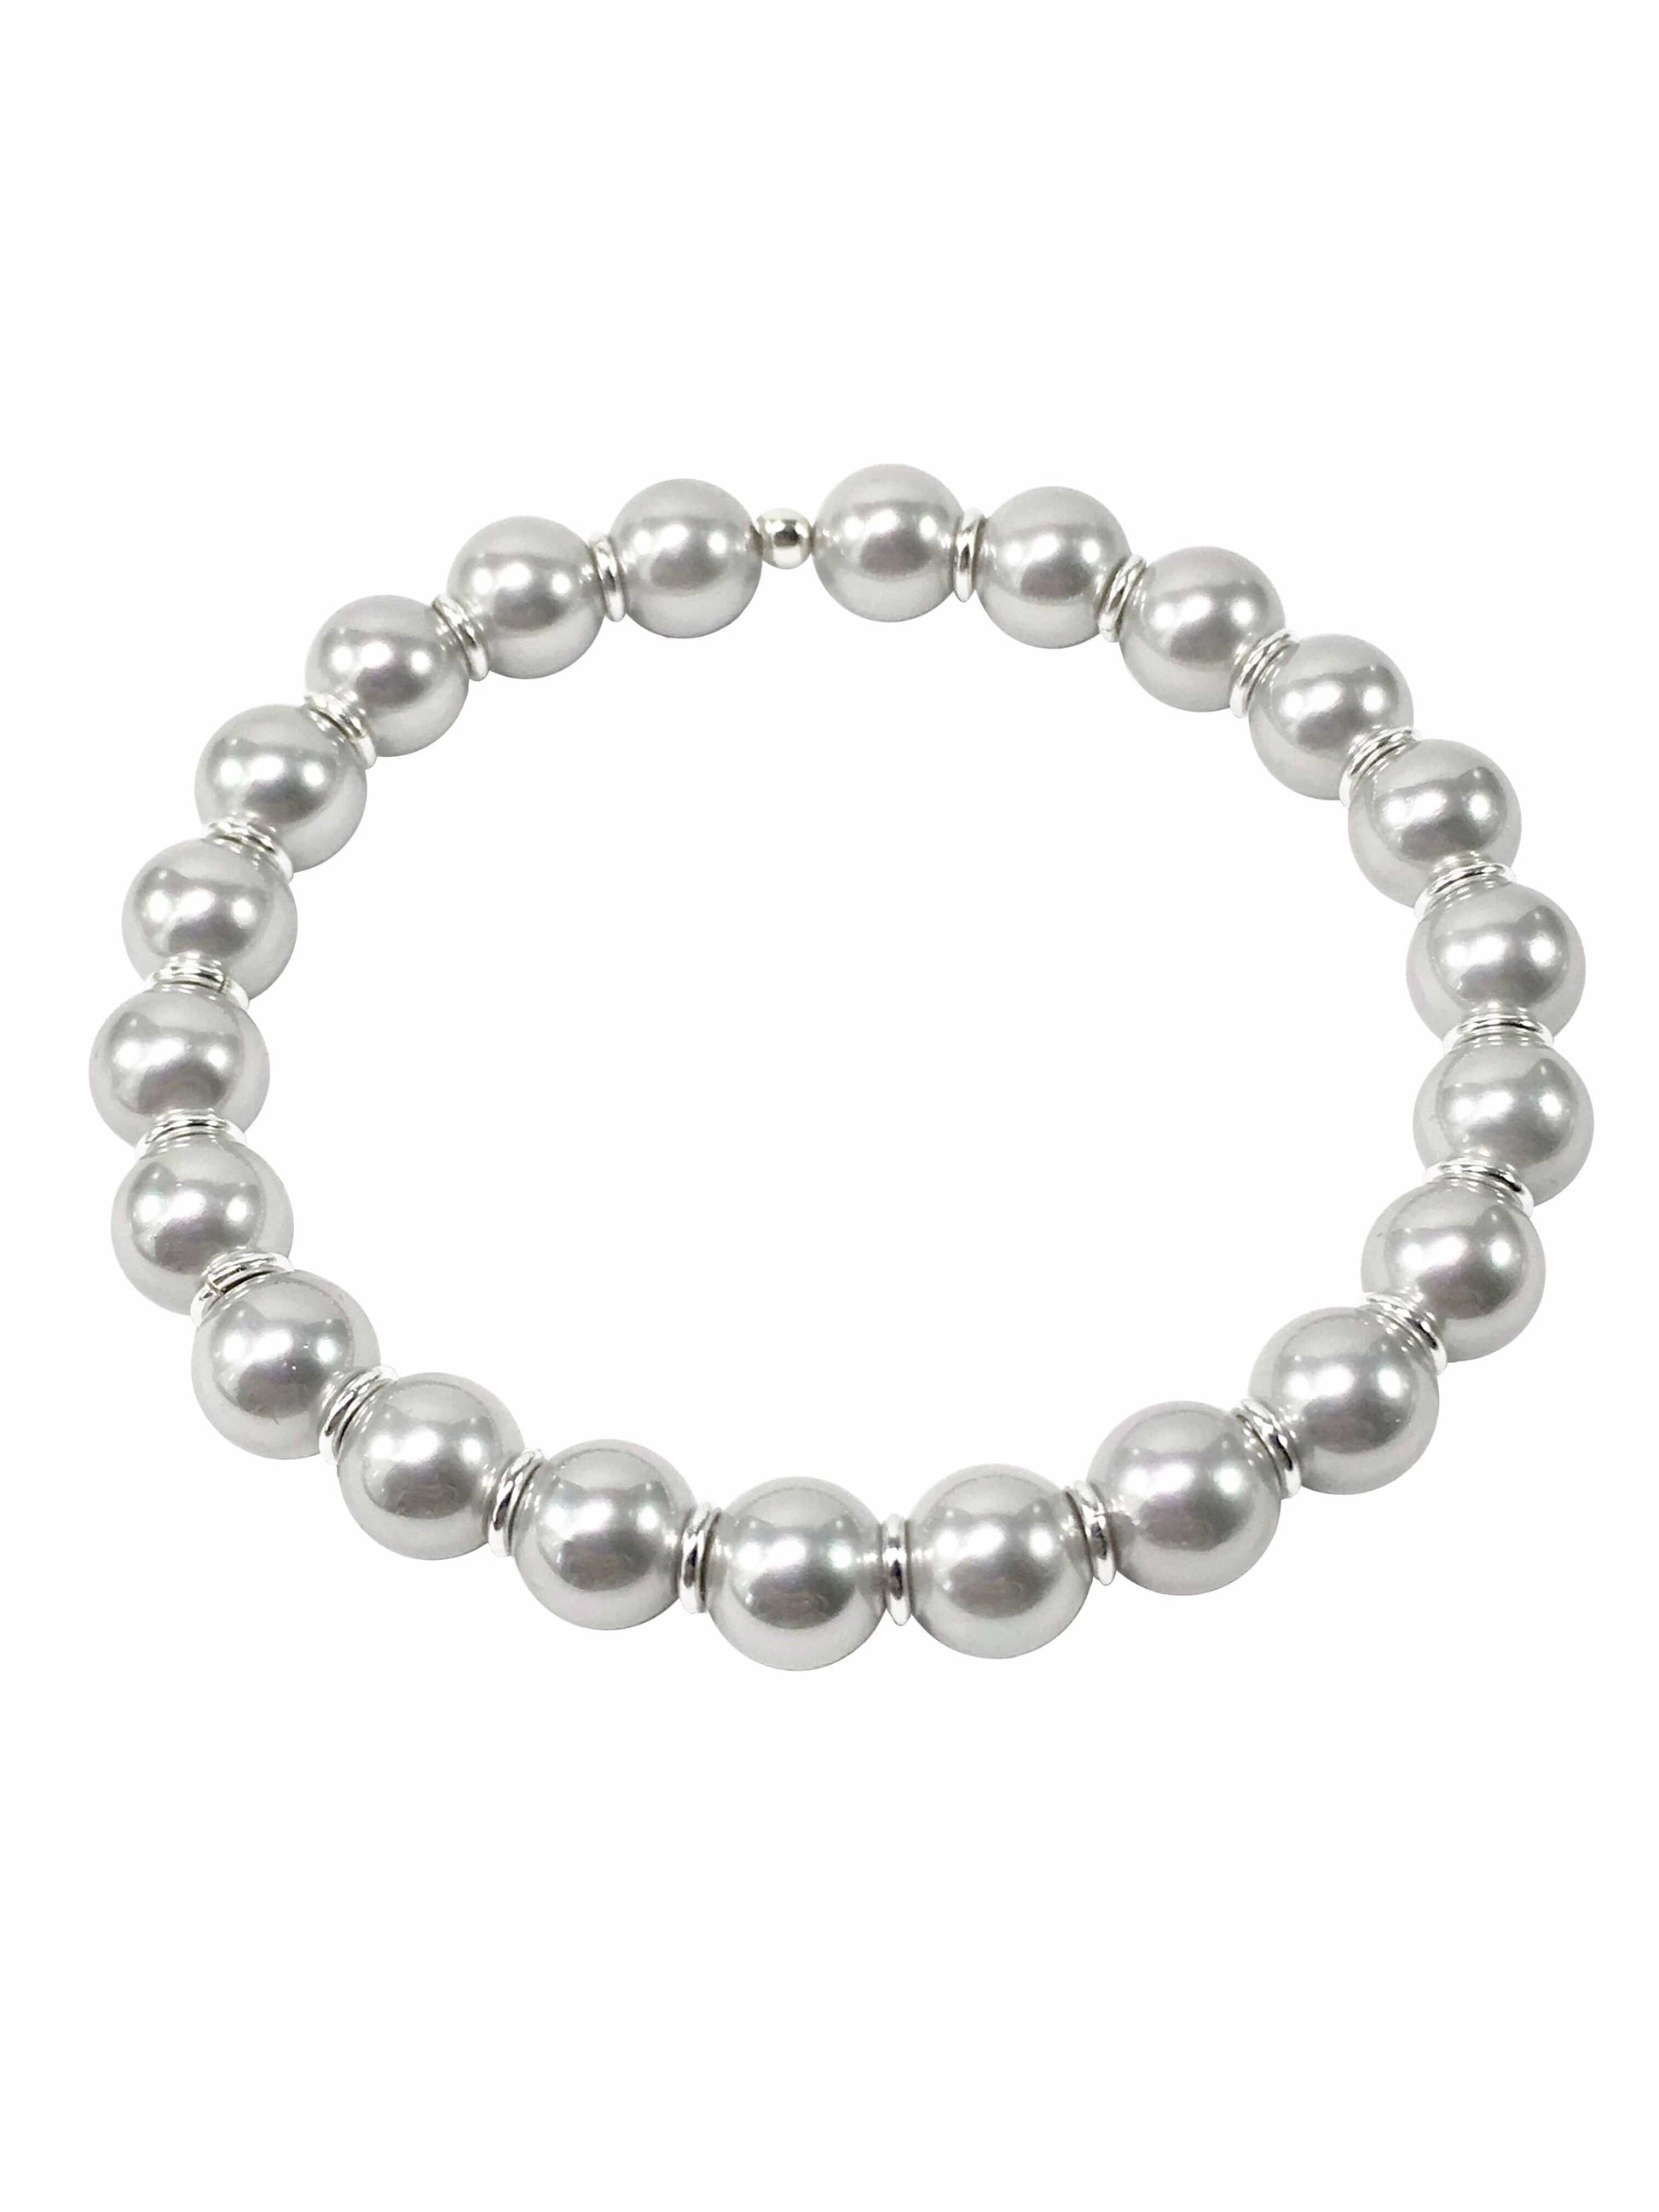 Silver Shell Pearl Stretch Bracelet